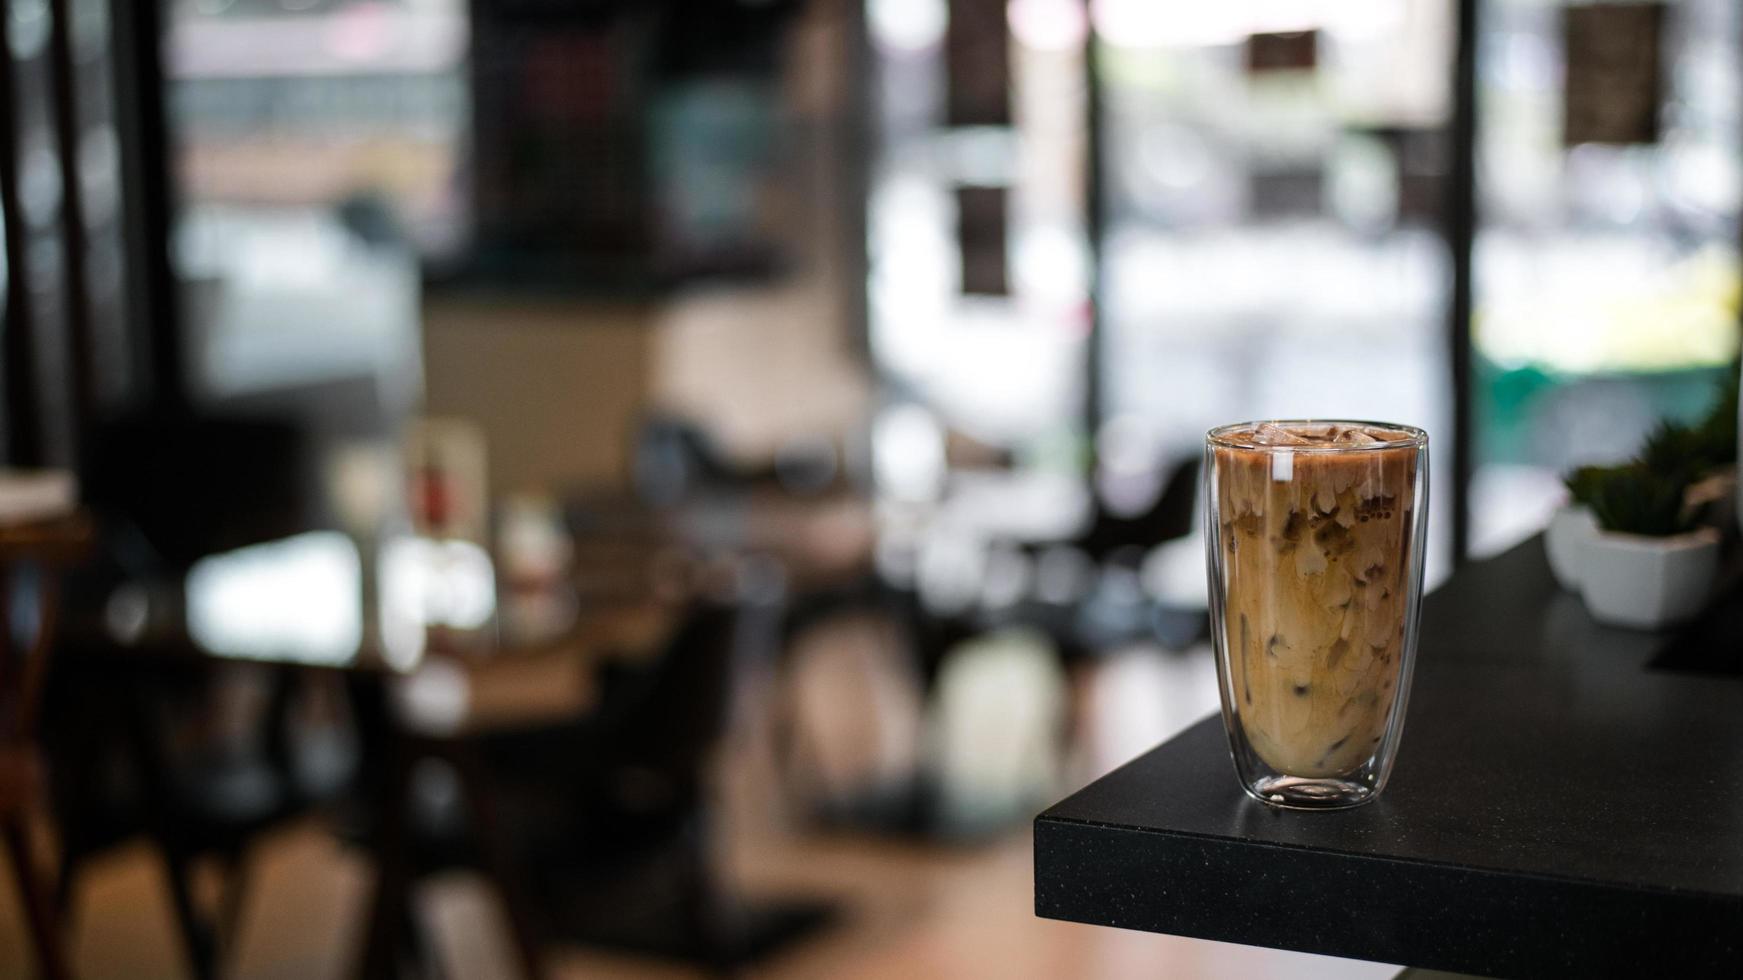 Iced coffee on a table inside a cafe photo